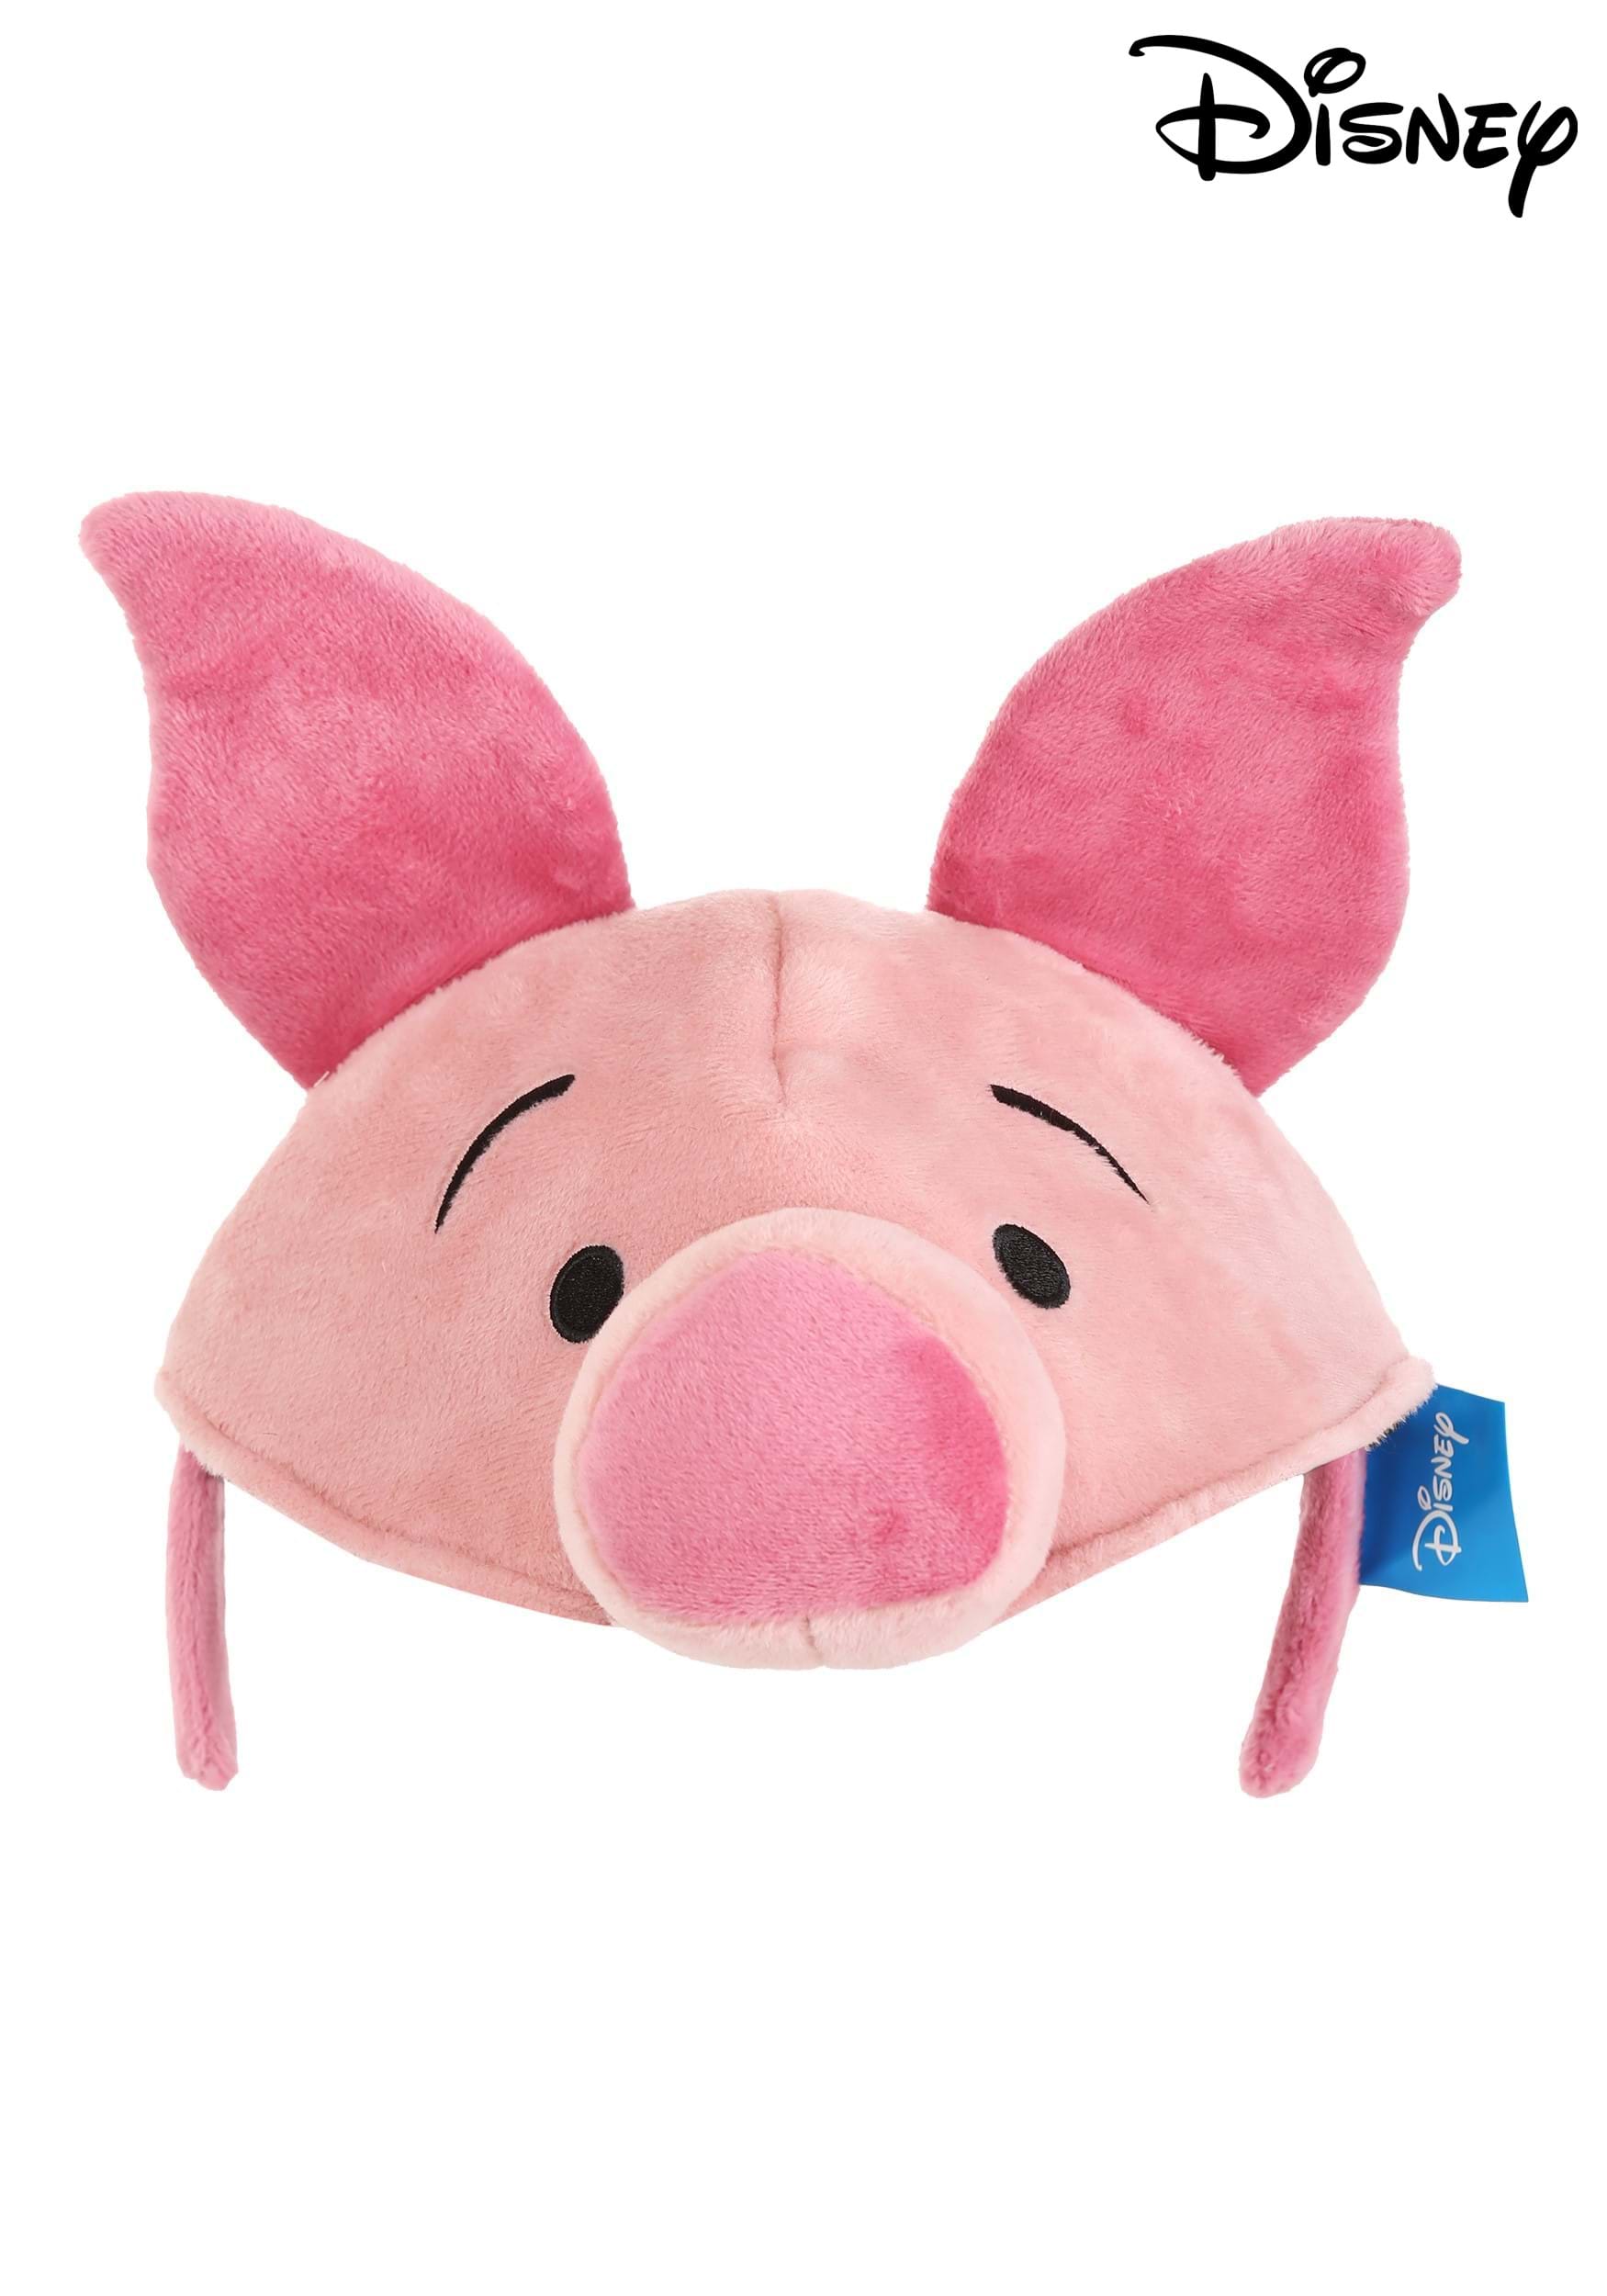 Plush Costume Headband Of Piglet From Winnie The Pooh